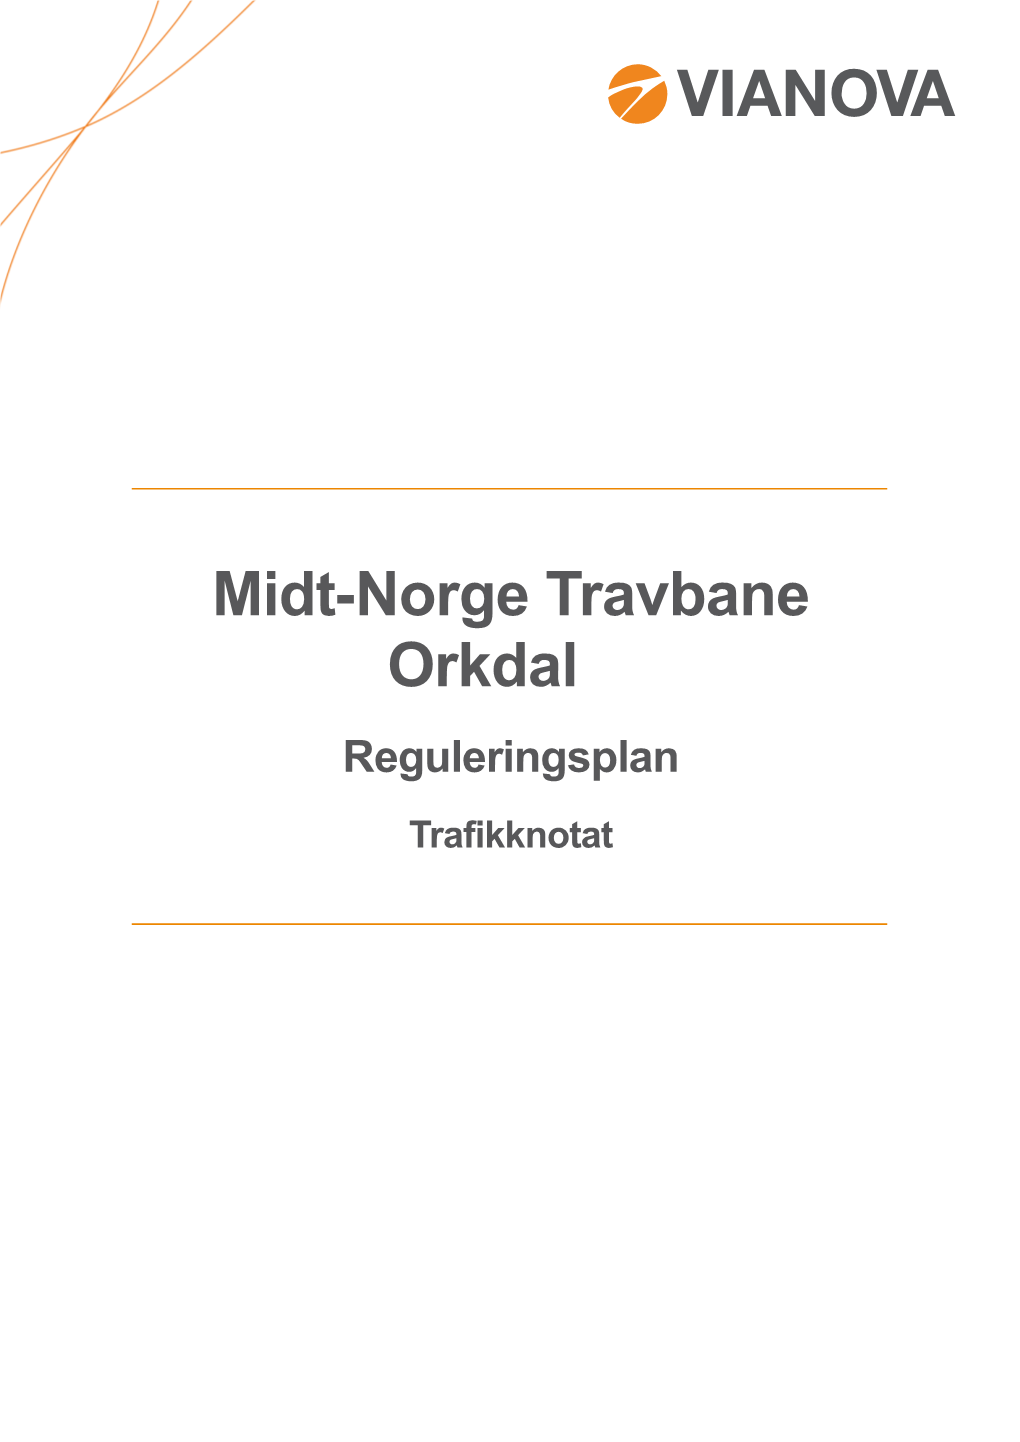 Midt-Norge Travbane Orkdal Reguleringsplan Trafikknotat